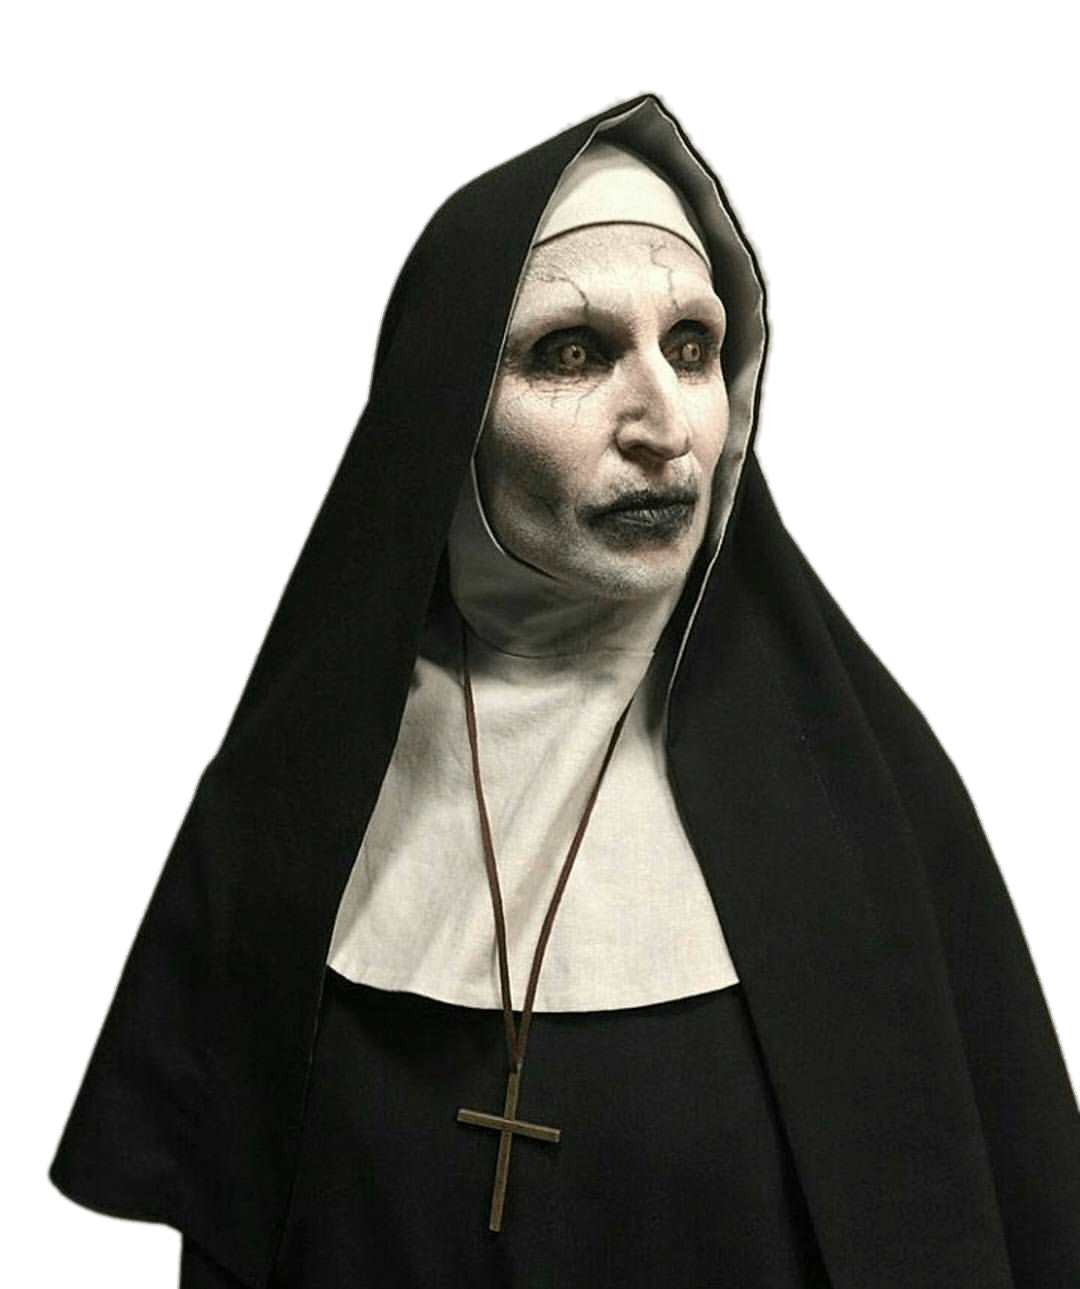 The Nun Wearing Cross Necklace Clip arts